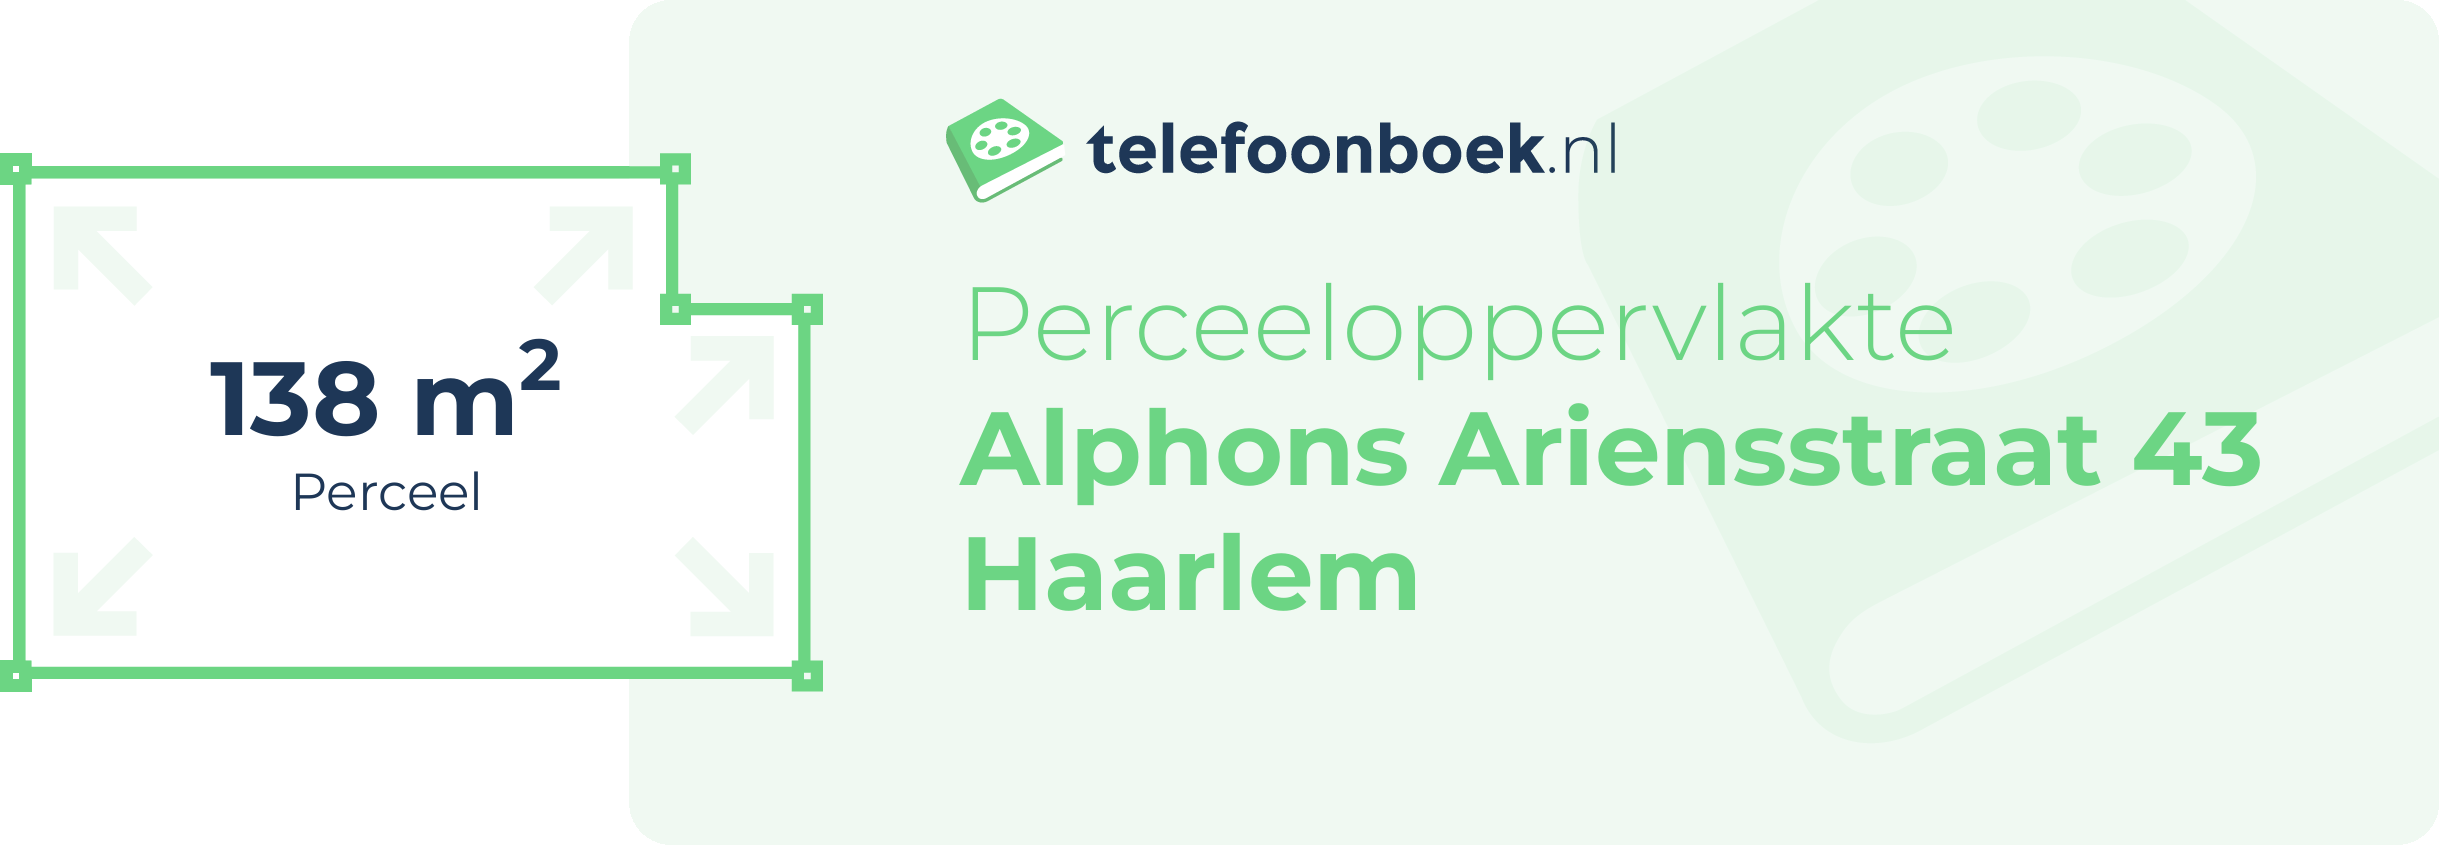 Perceeloppervlakte Alphons Ariensstraat 43 Haarlem